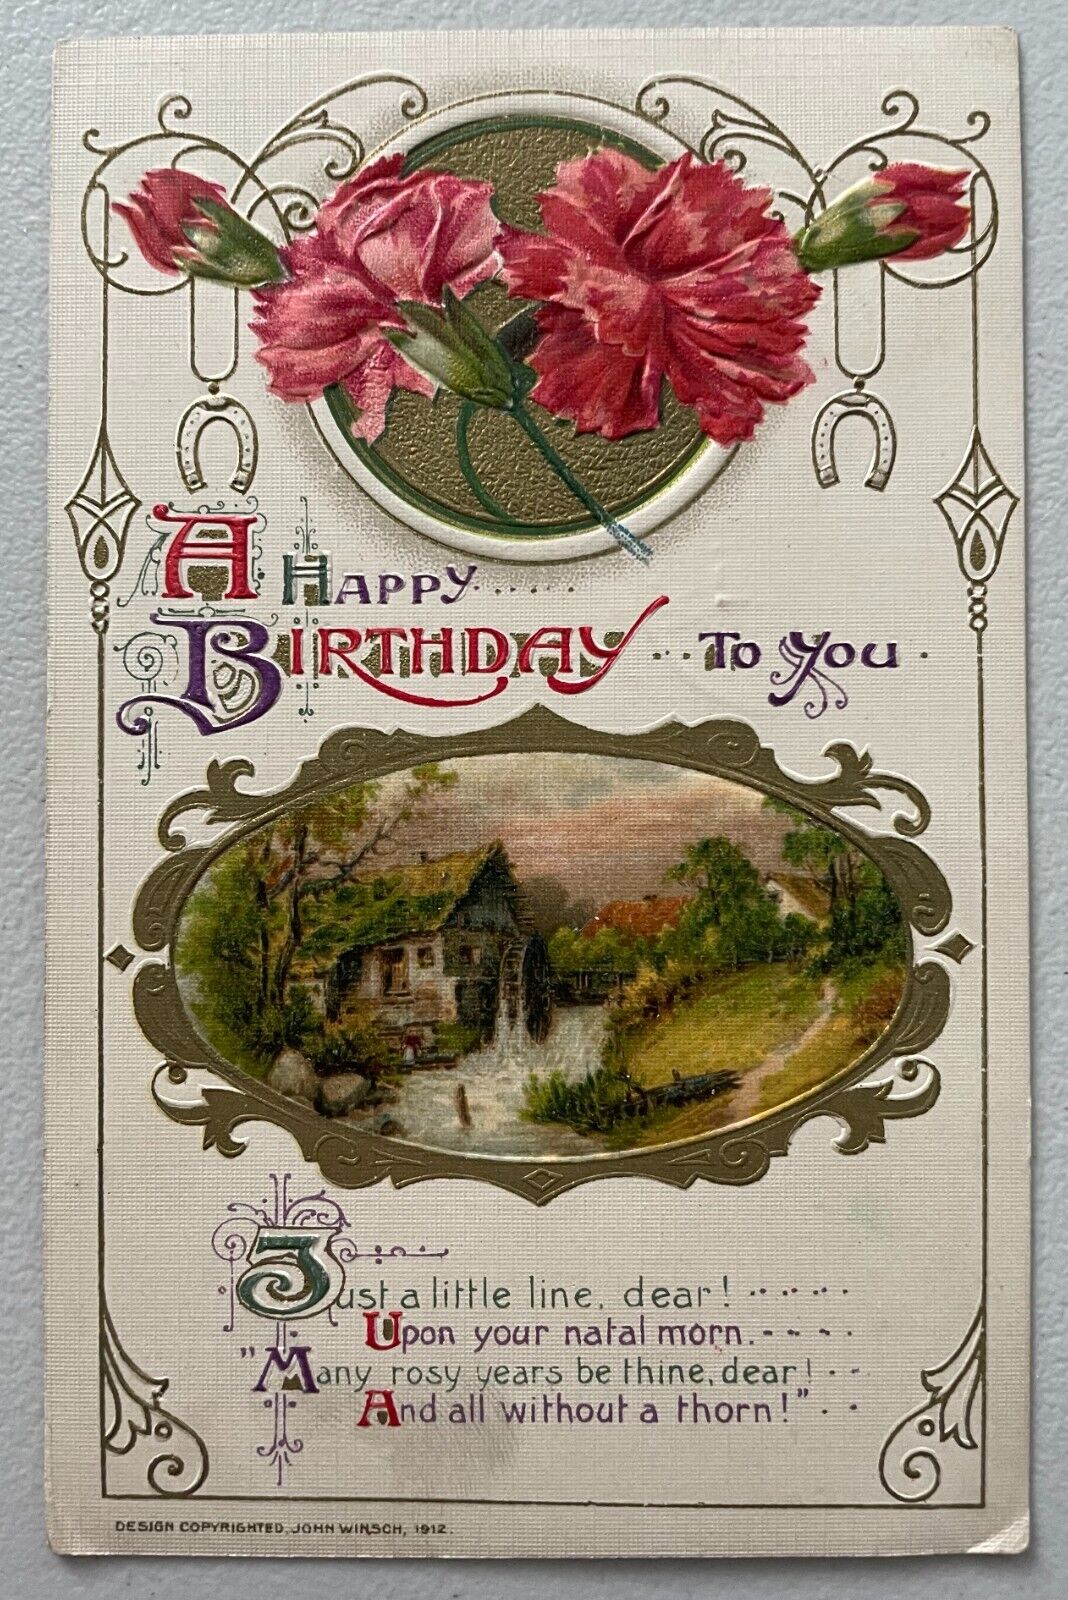 1912 John Winsch Birthday Greetings pink carnations cottage vintage Postcard